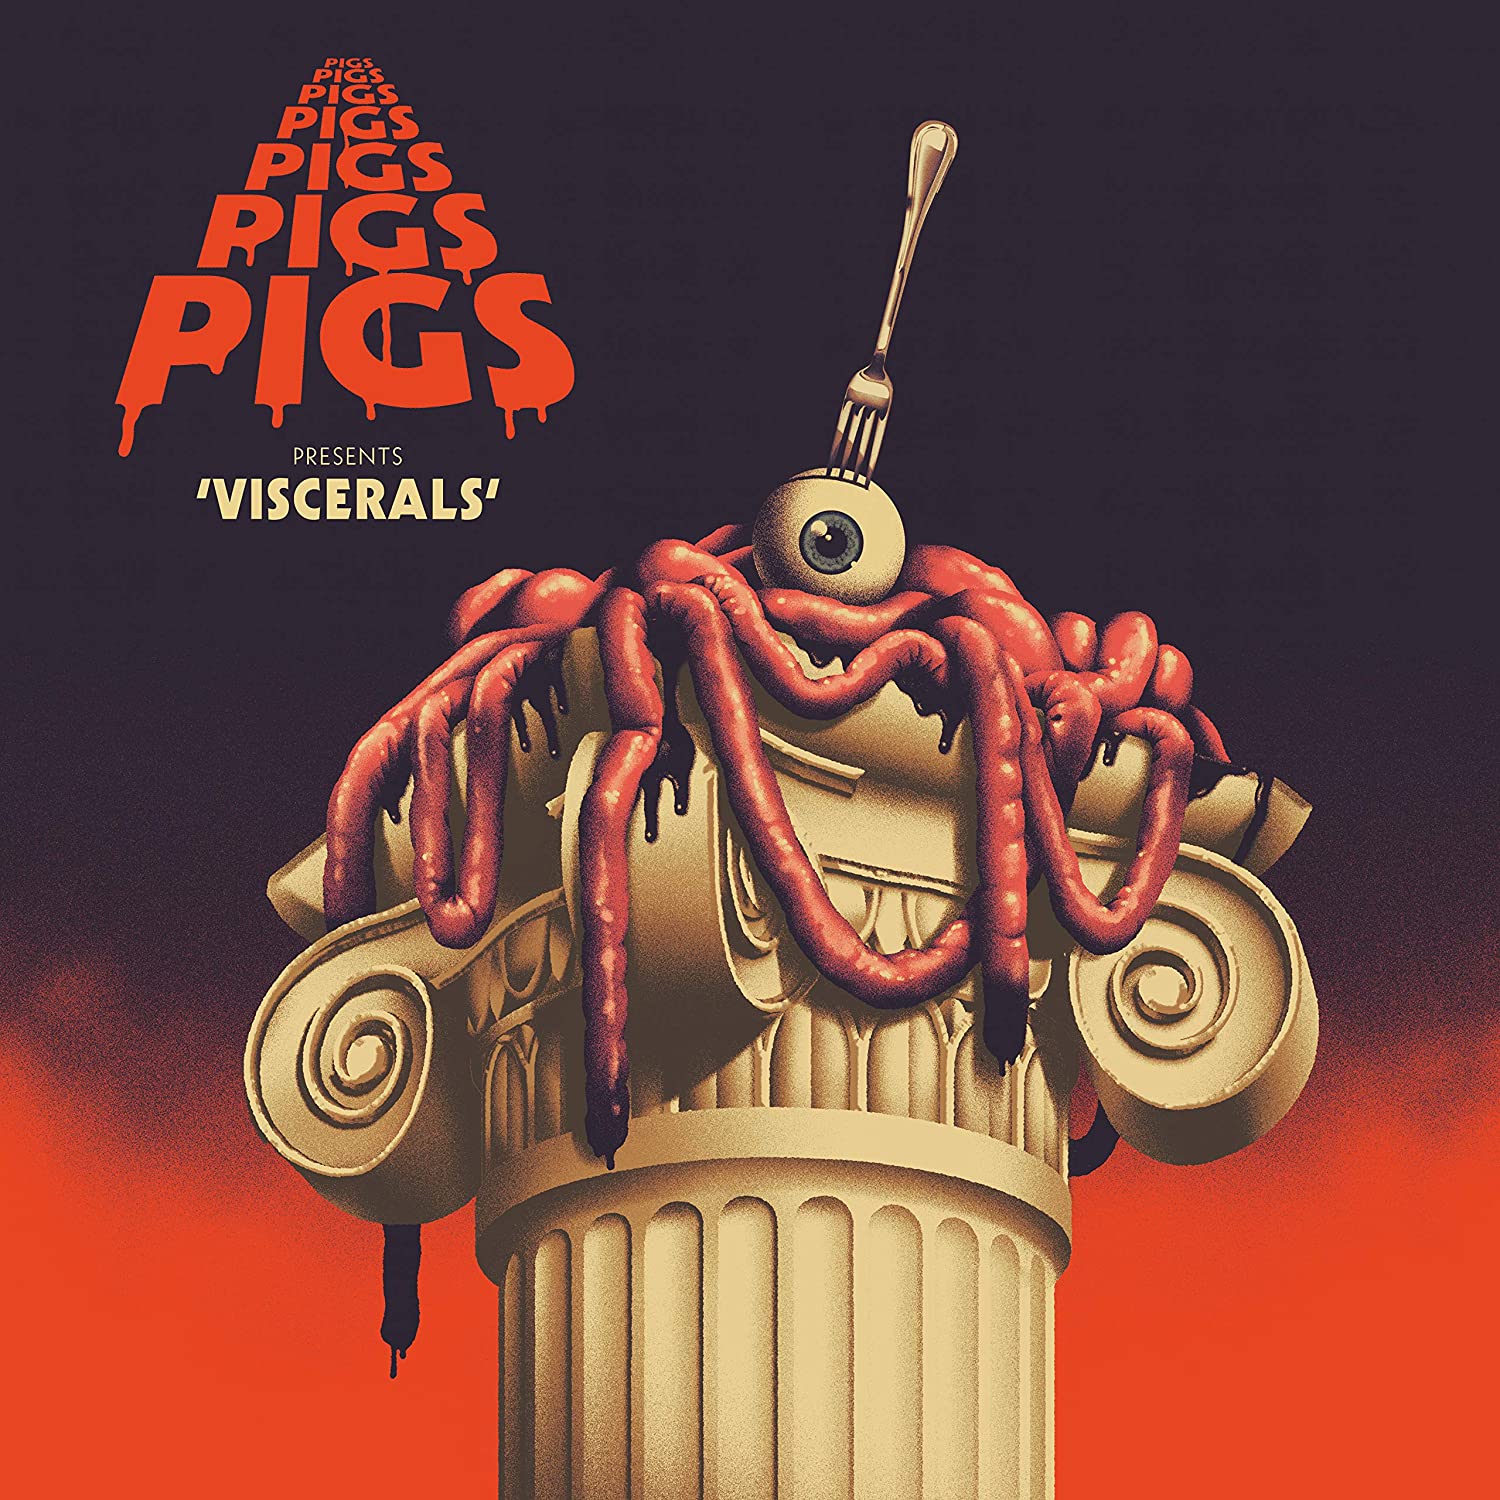 Copertina Vinile 33 giri Viscerals di Pigs Pigs Pigs Pigs Pigs Pigs Pigs